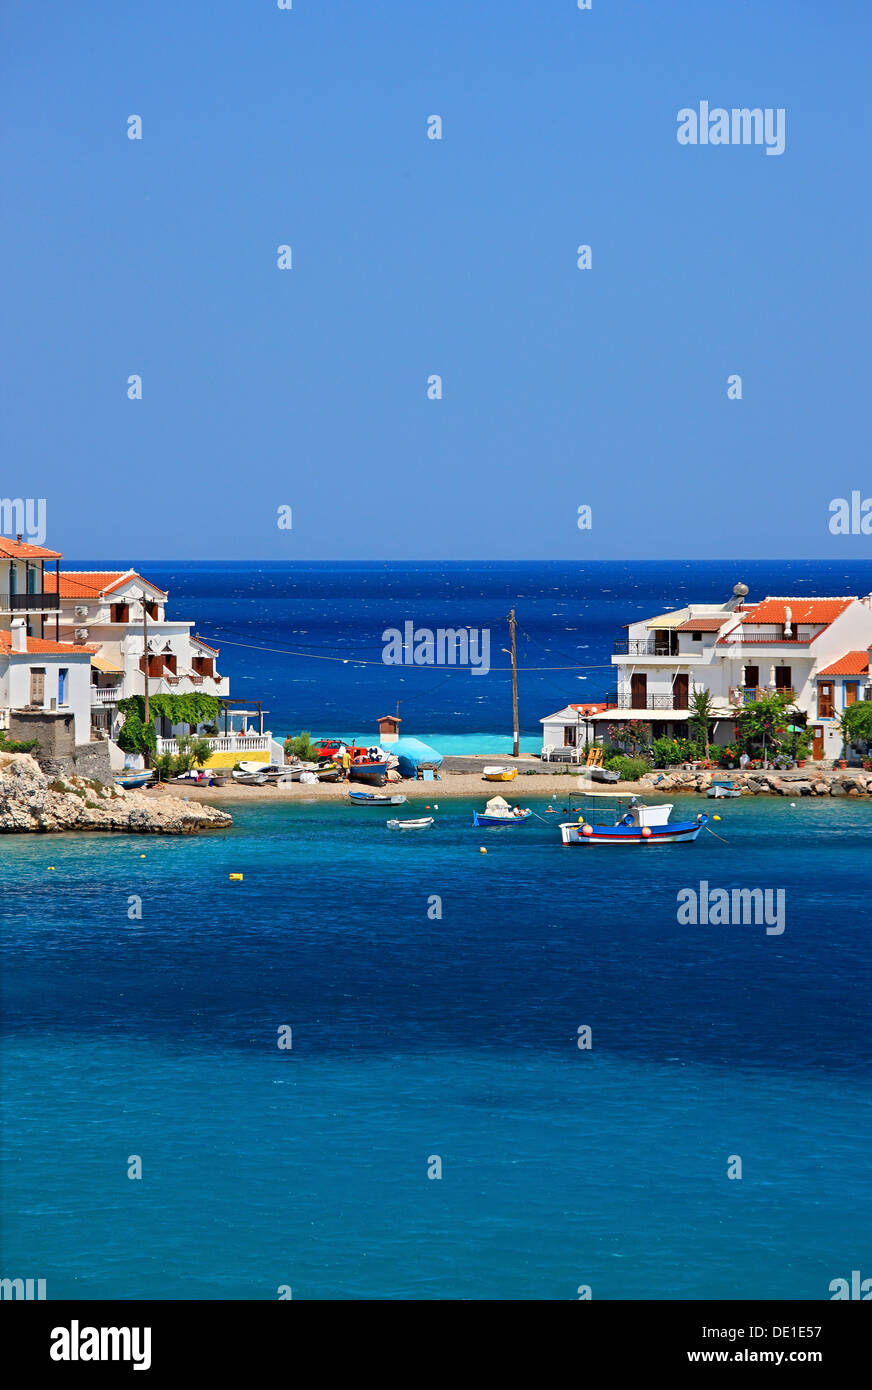 Kokkari village, one of the most popular tourist destinations in Samos island, Greece. Stock Photo